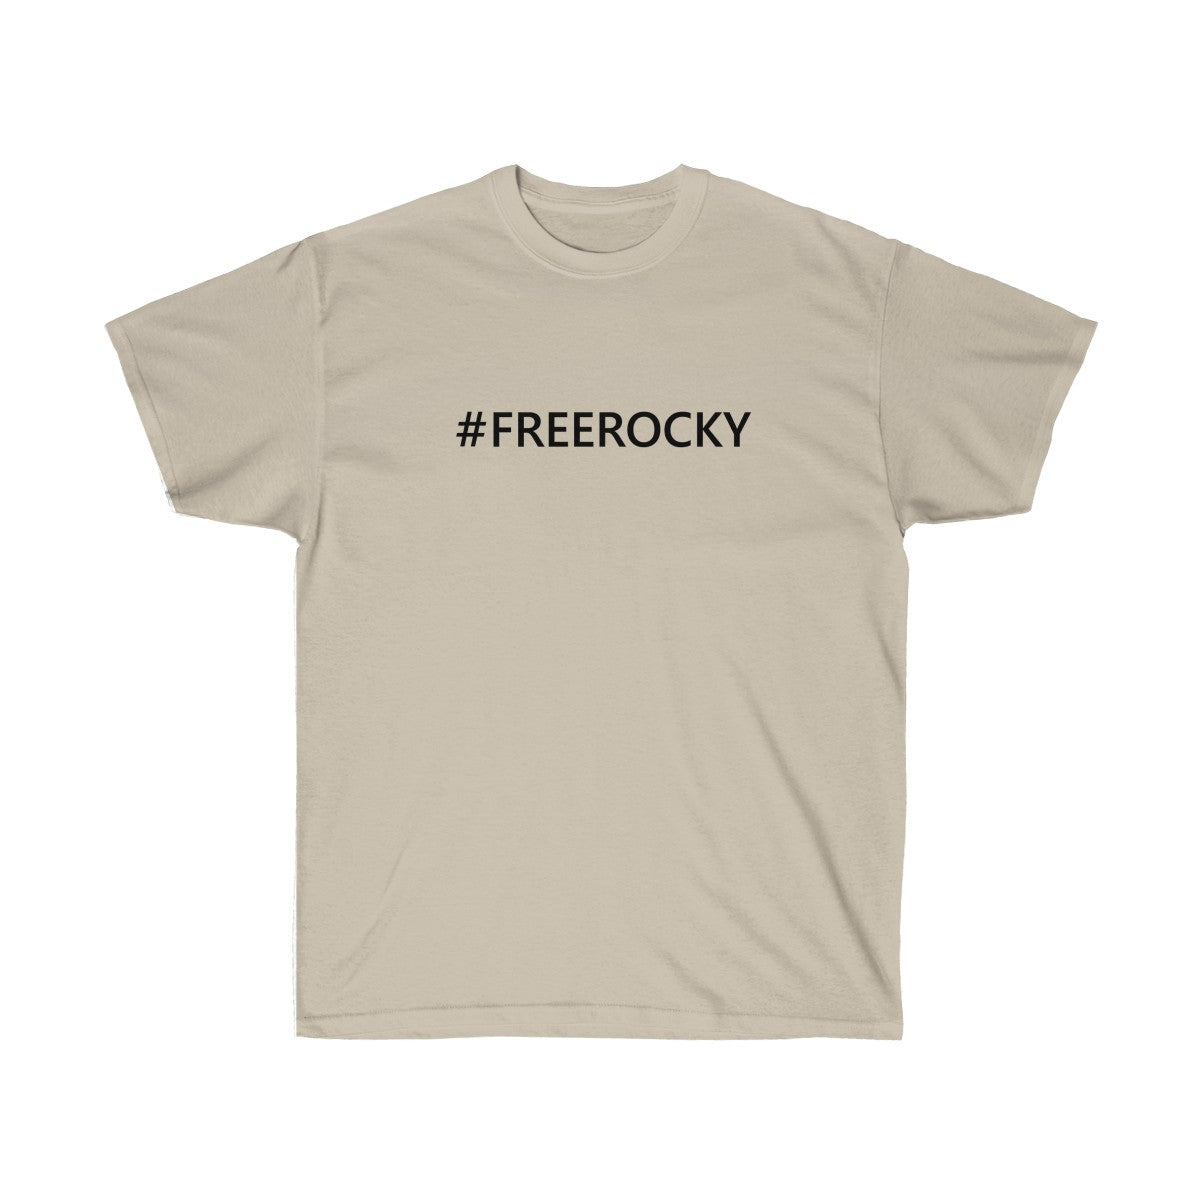 Unisex Ultra Cotton Tee #FREEROCKY T-Shirt-Sand-S-Archethype